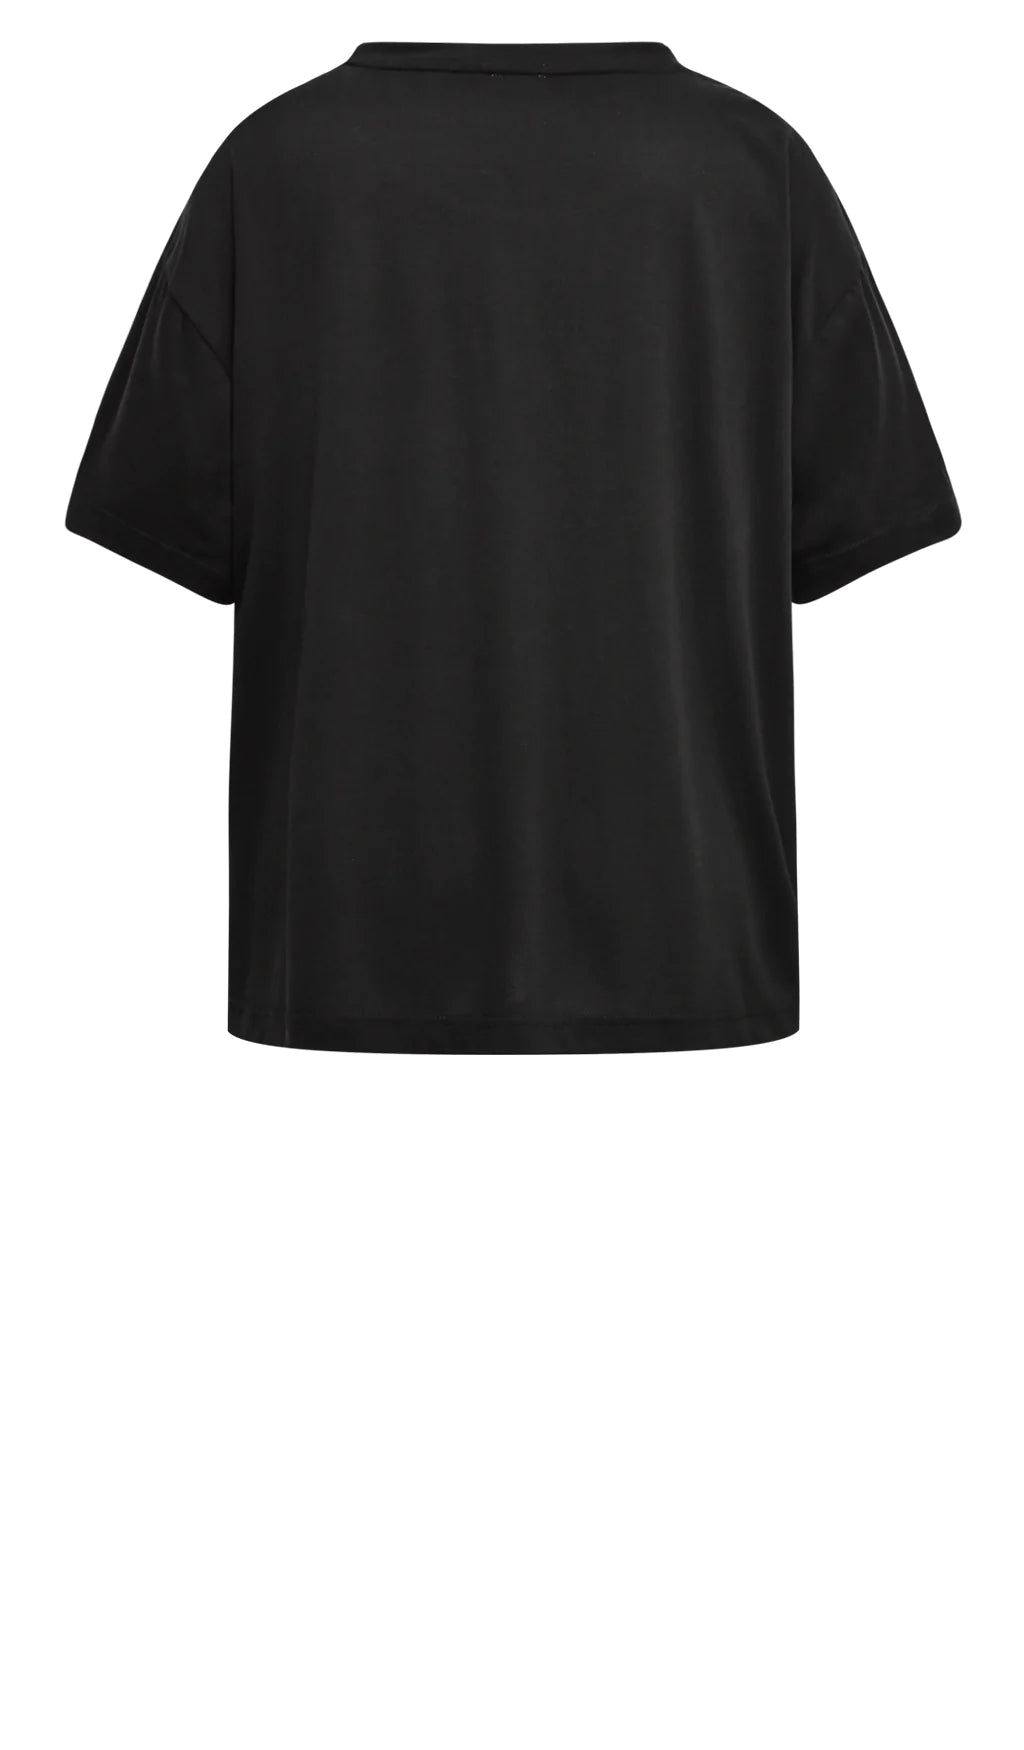 ThitGo Tee, Black, T-shirt fra Gossia